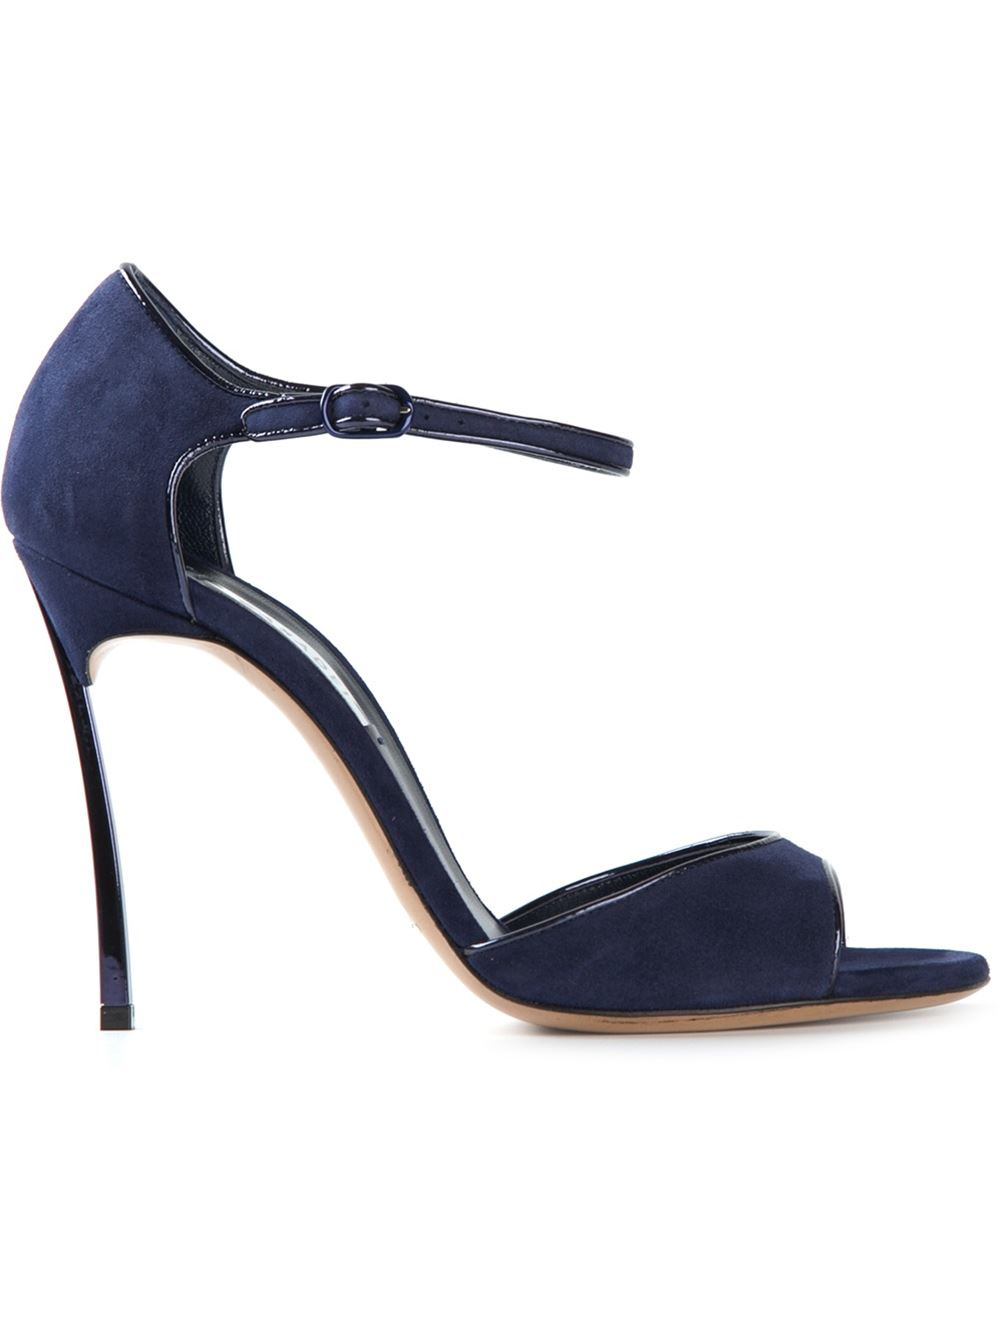 Casadei Ankle Strap Stiletto Sandals in Blue | Lyst